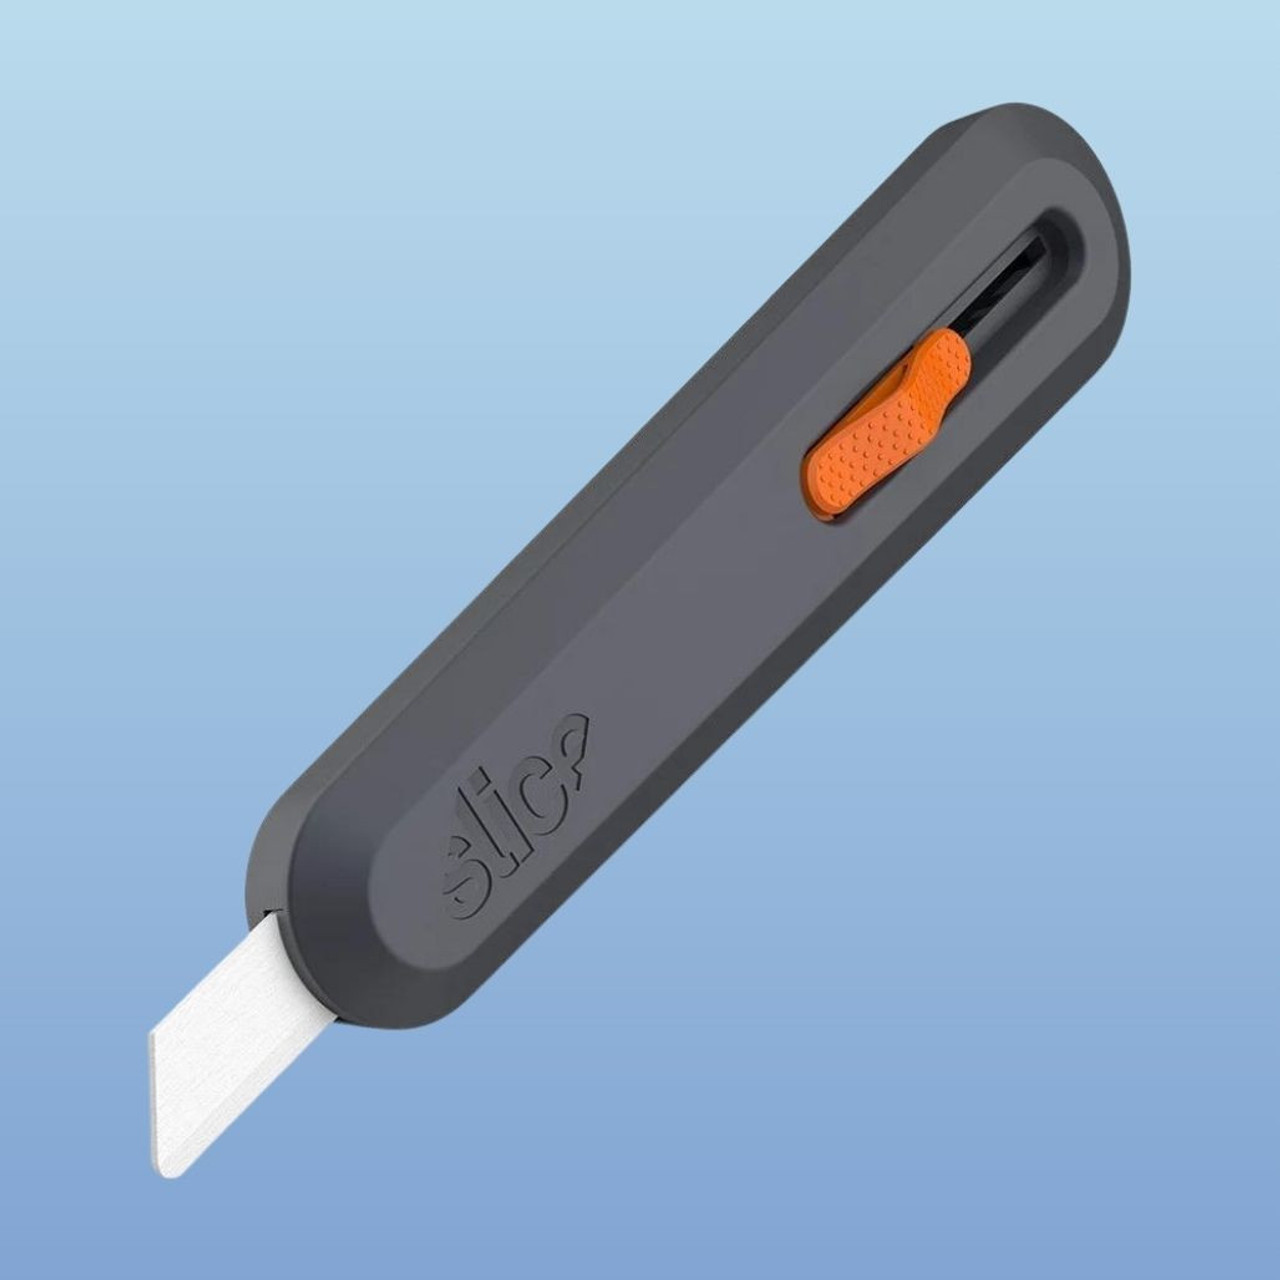 Slice - Manual Utility Knife